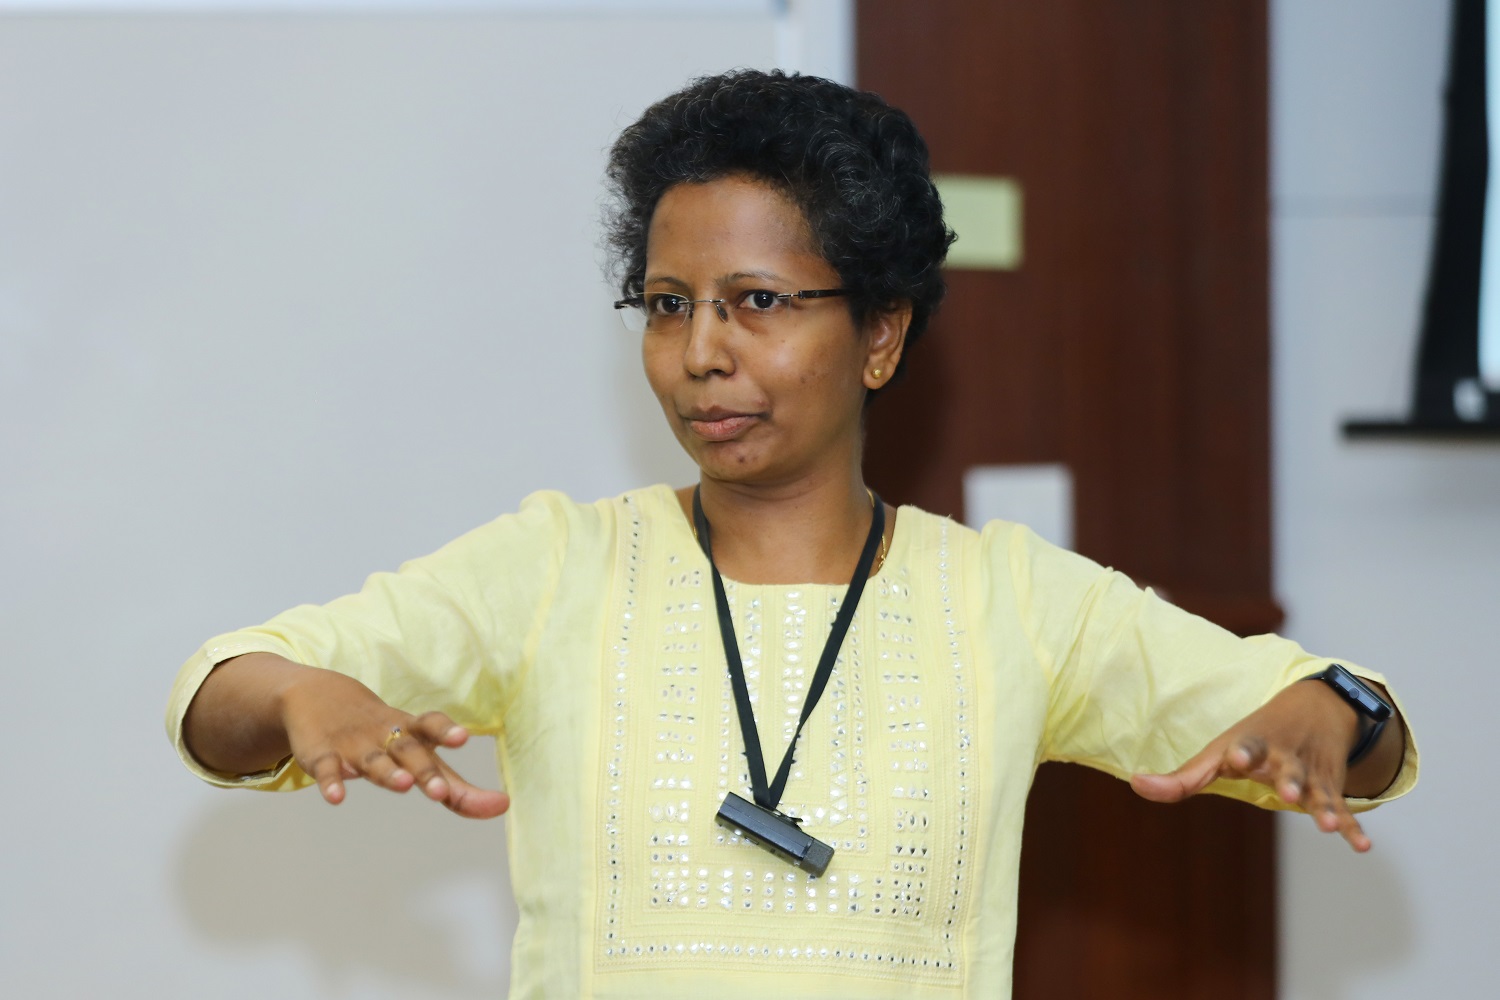 Dr. Sheela Siddappa, Director - Data Science, Kyndryl, spoke on 'Retail Operations through AI' at WiDS Bengaluru Conference.